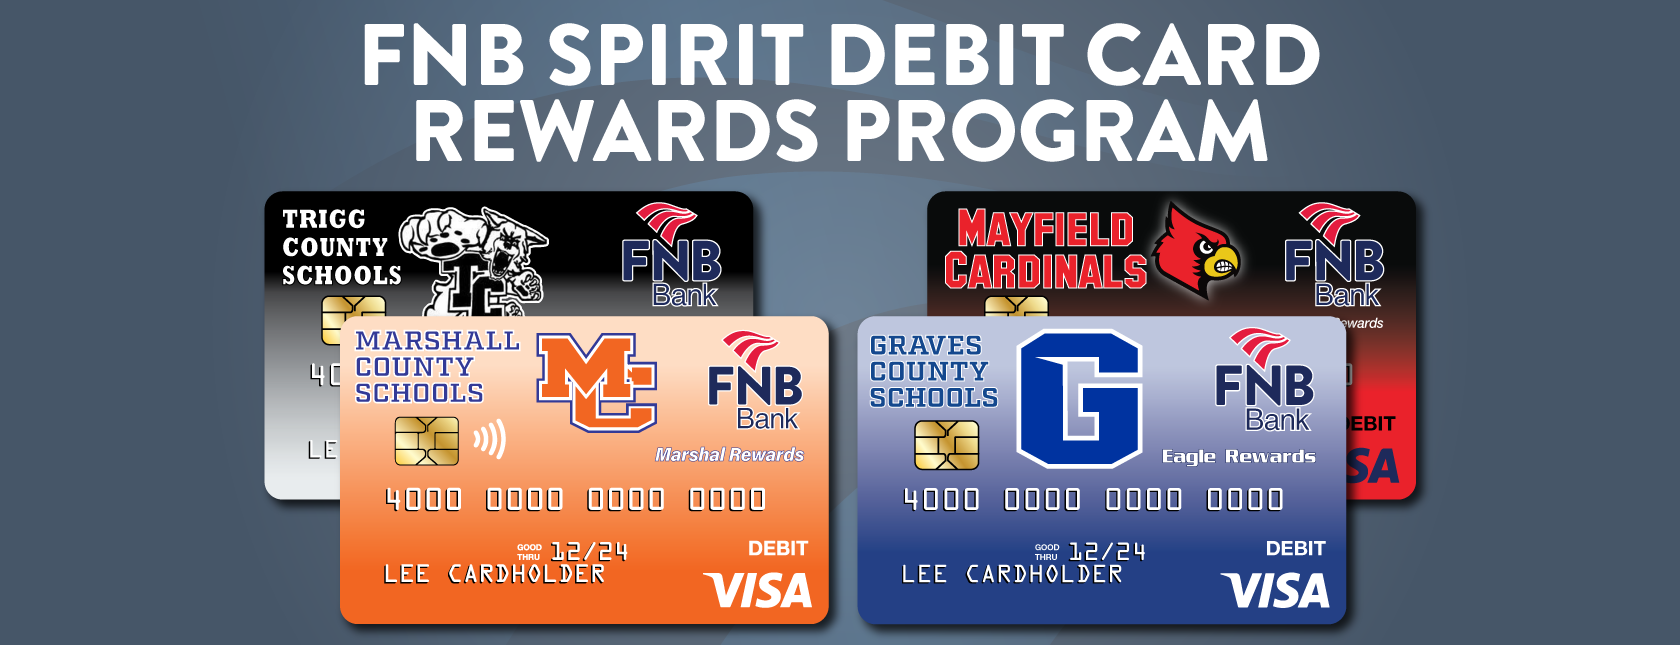 Spirit Debit Card Reward Program Cards Spirit Debit Card Reward Program Cards